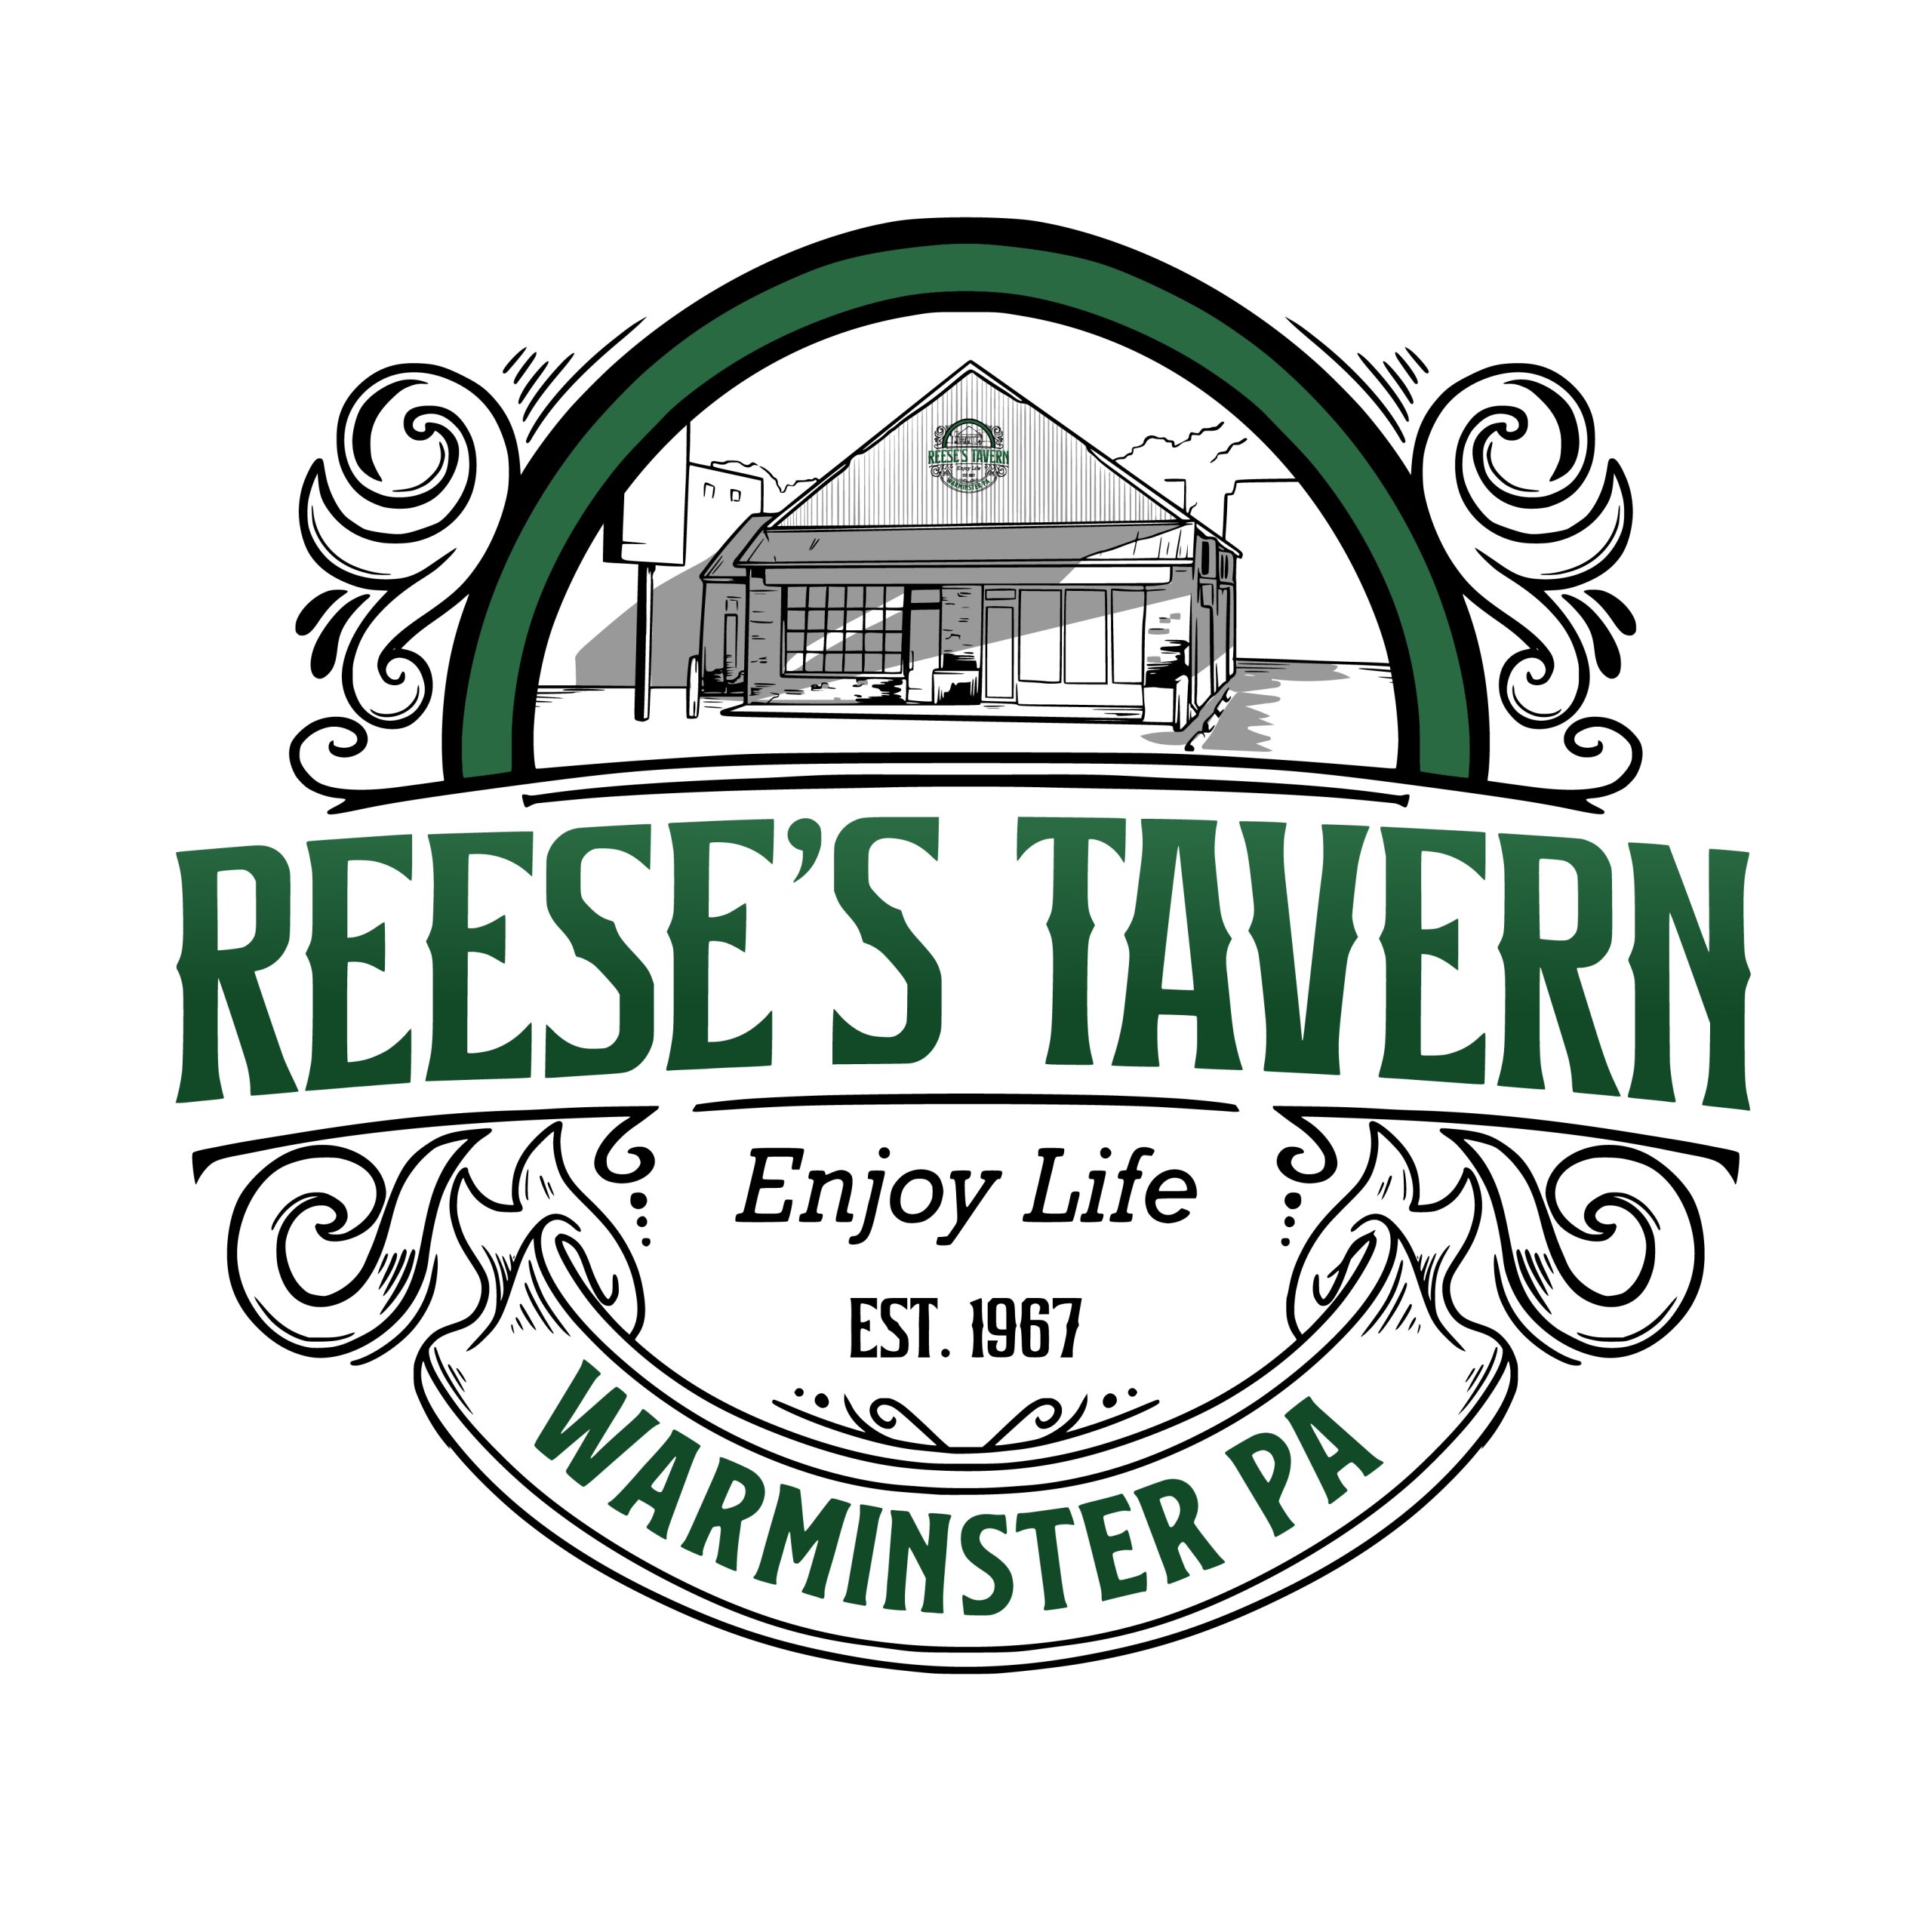 Reese's tavern logo.